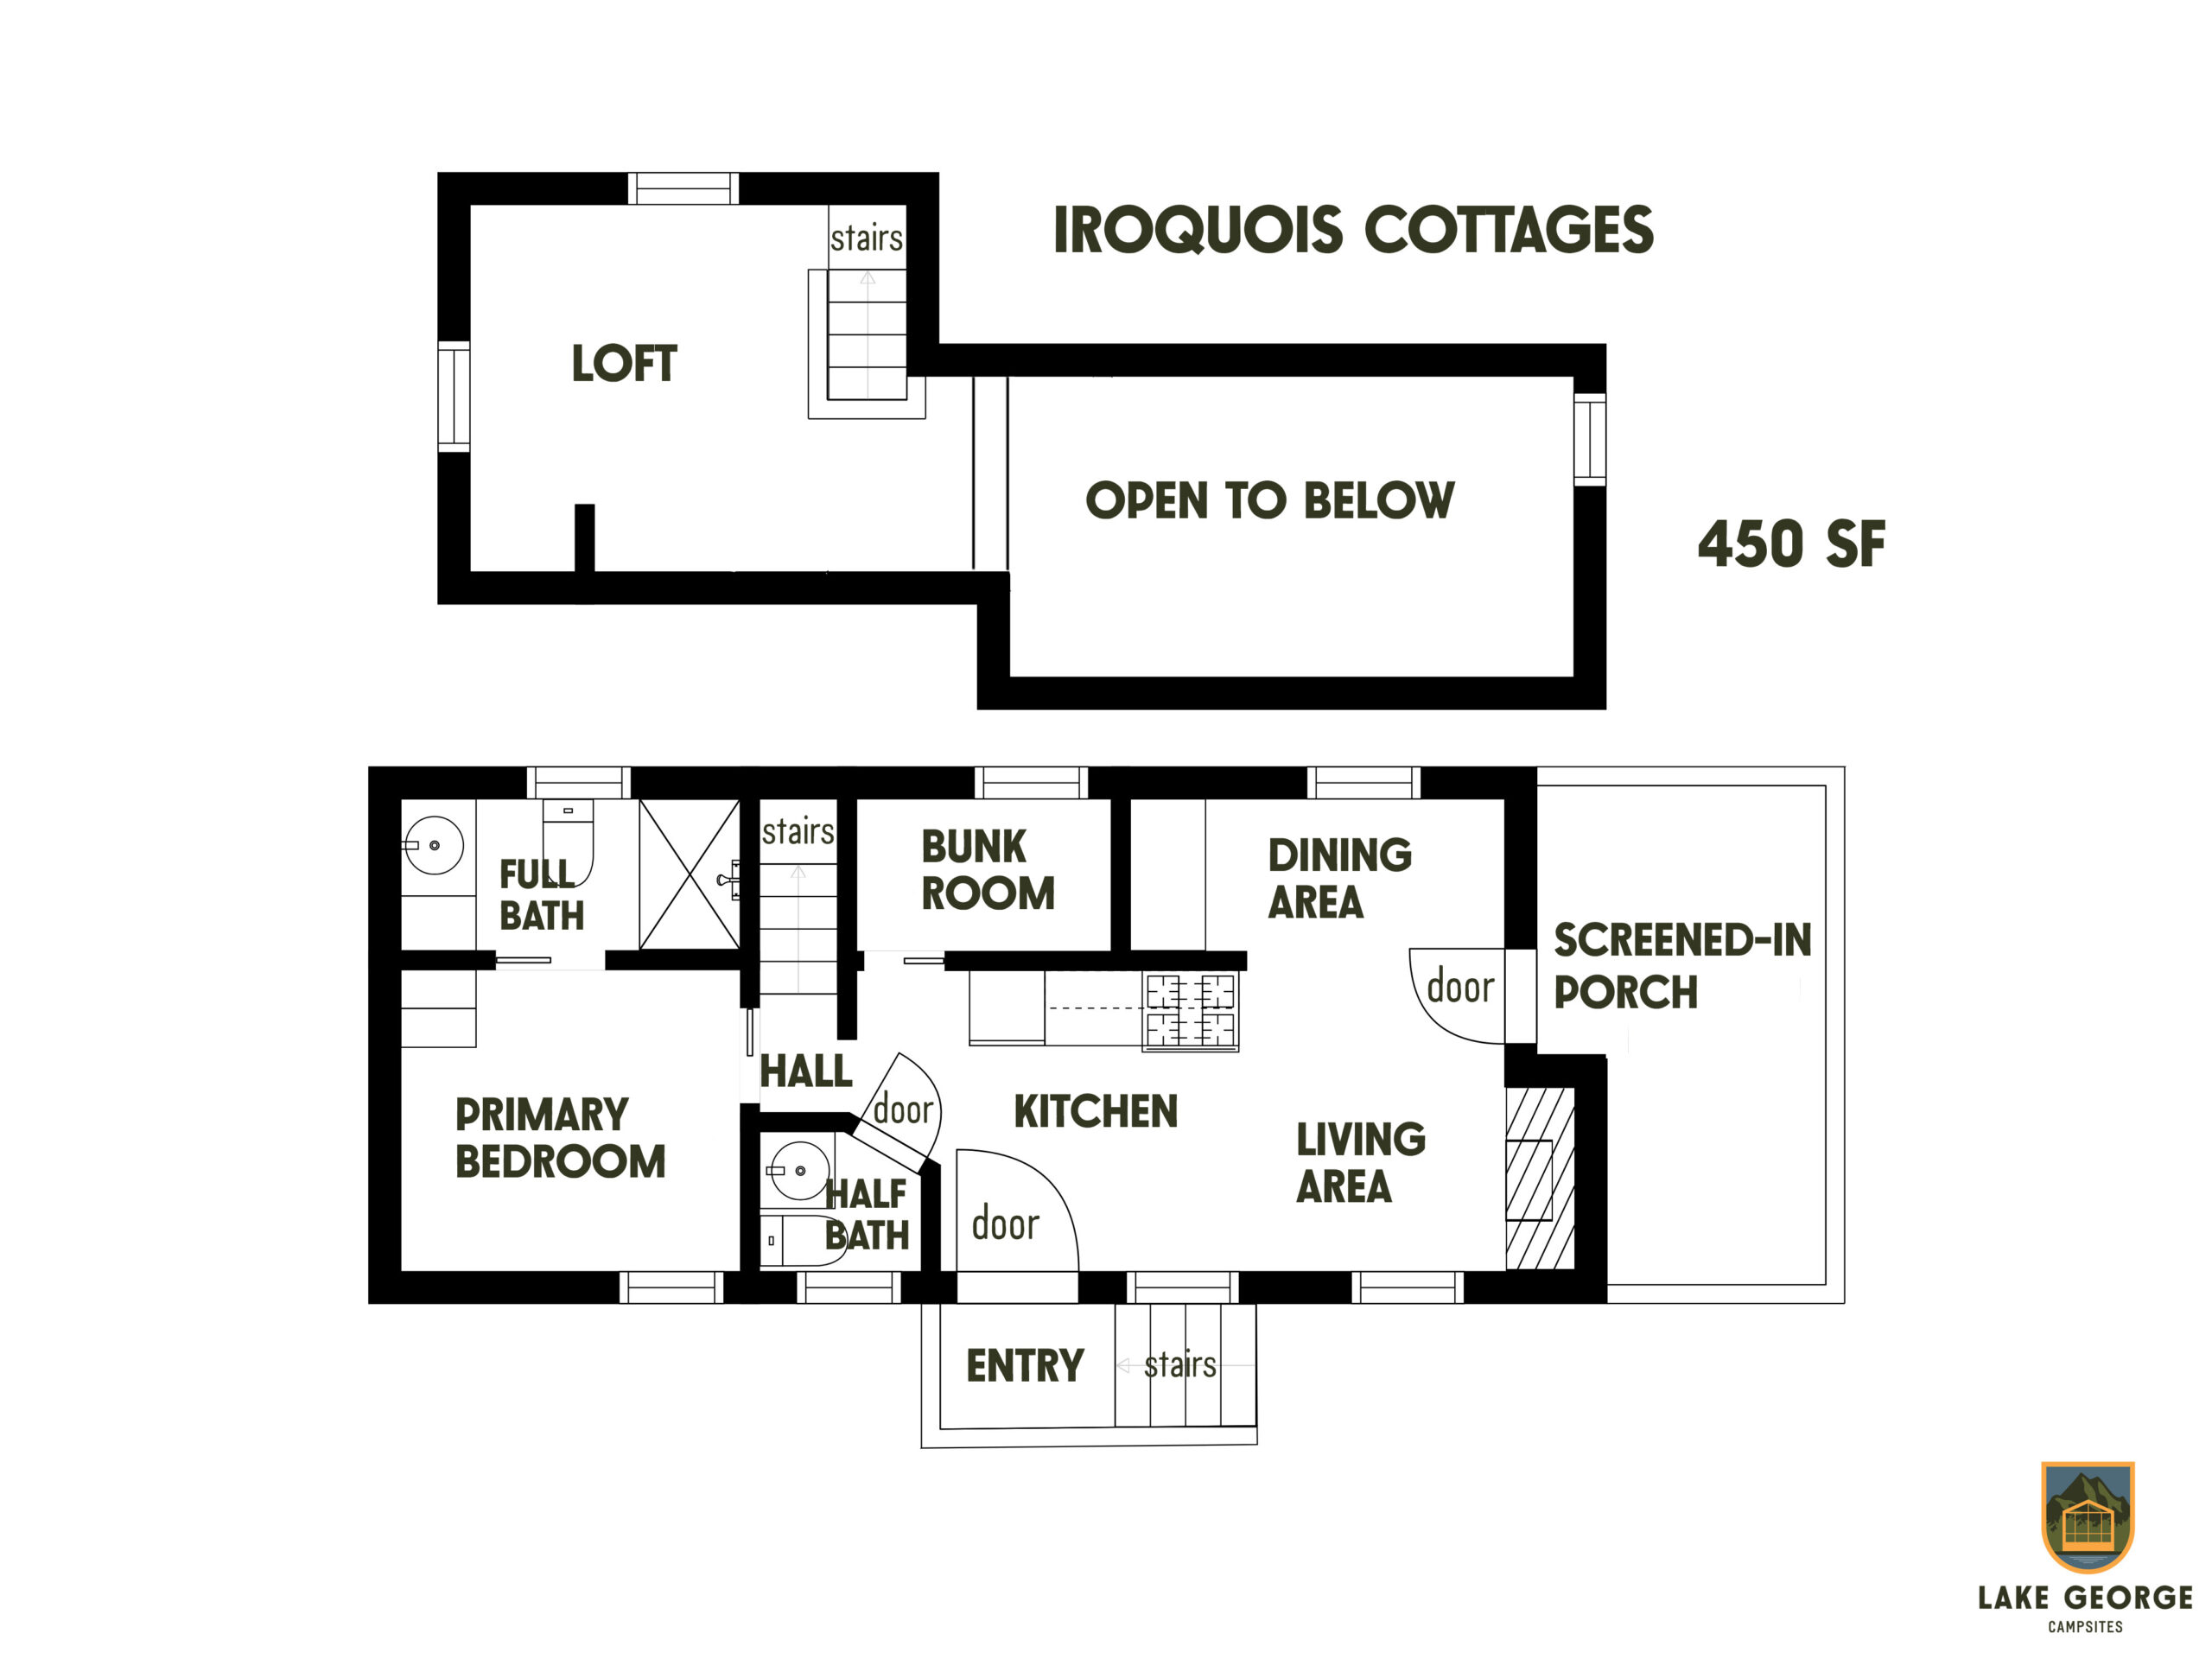 Iroquois-cottages-floor-plan